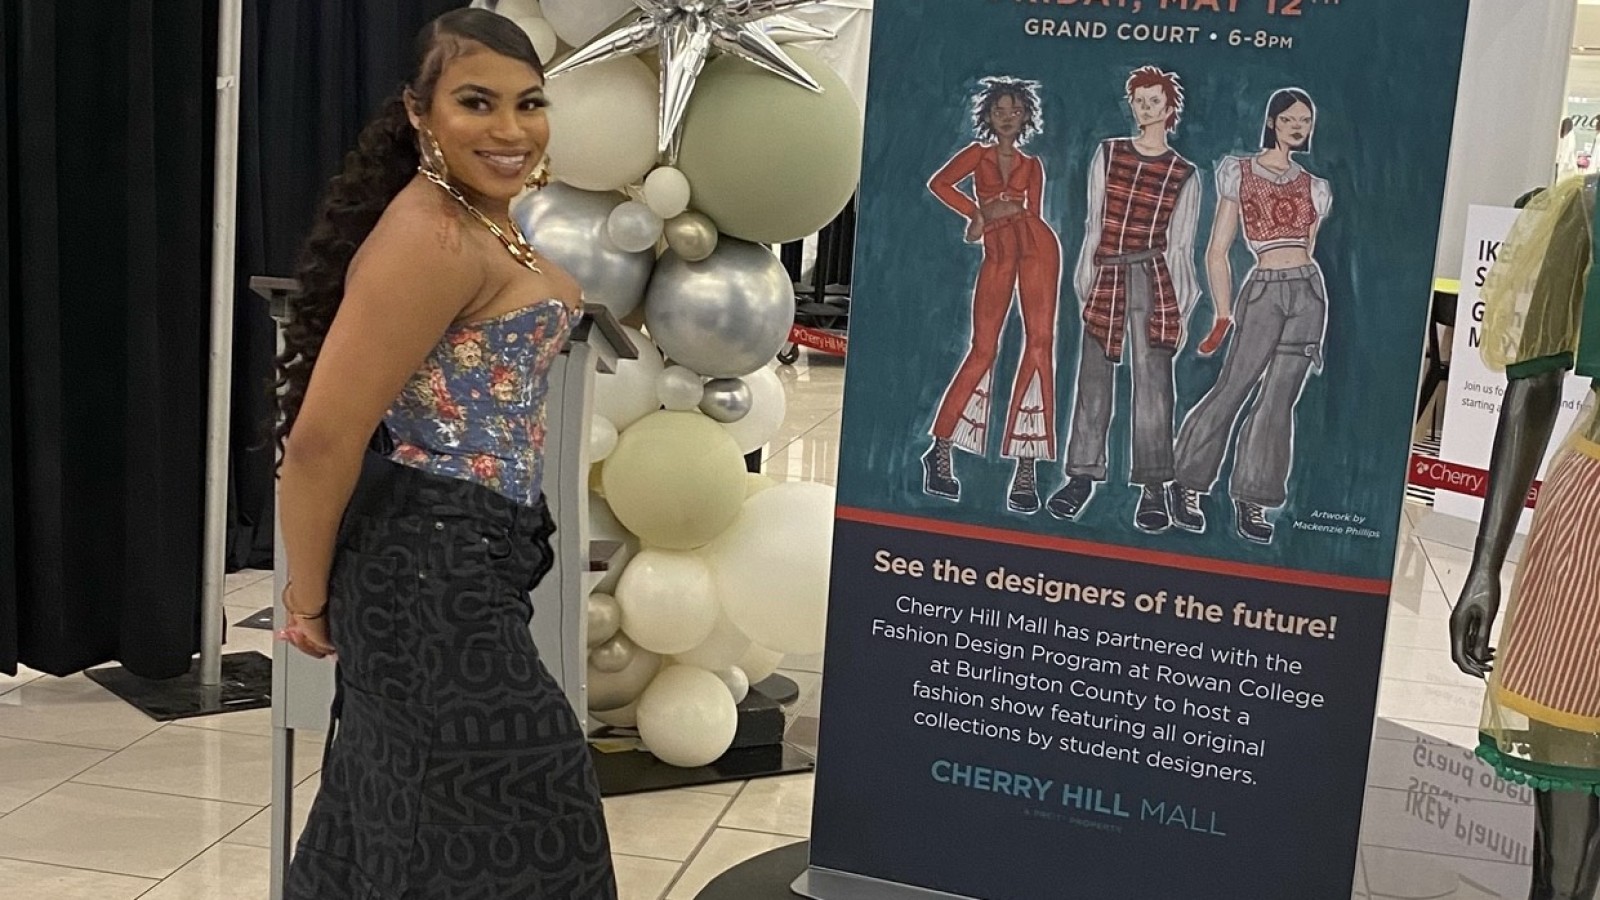 RCBC Fashion design student standing next to Fashion Show poster